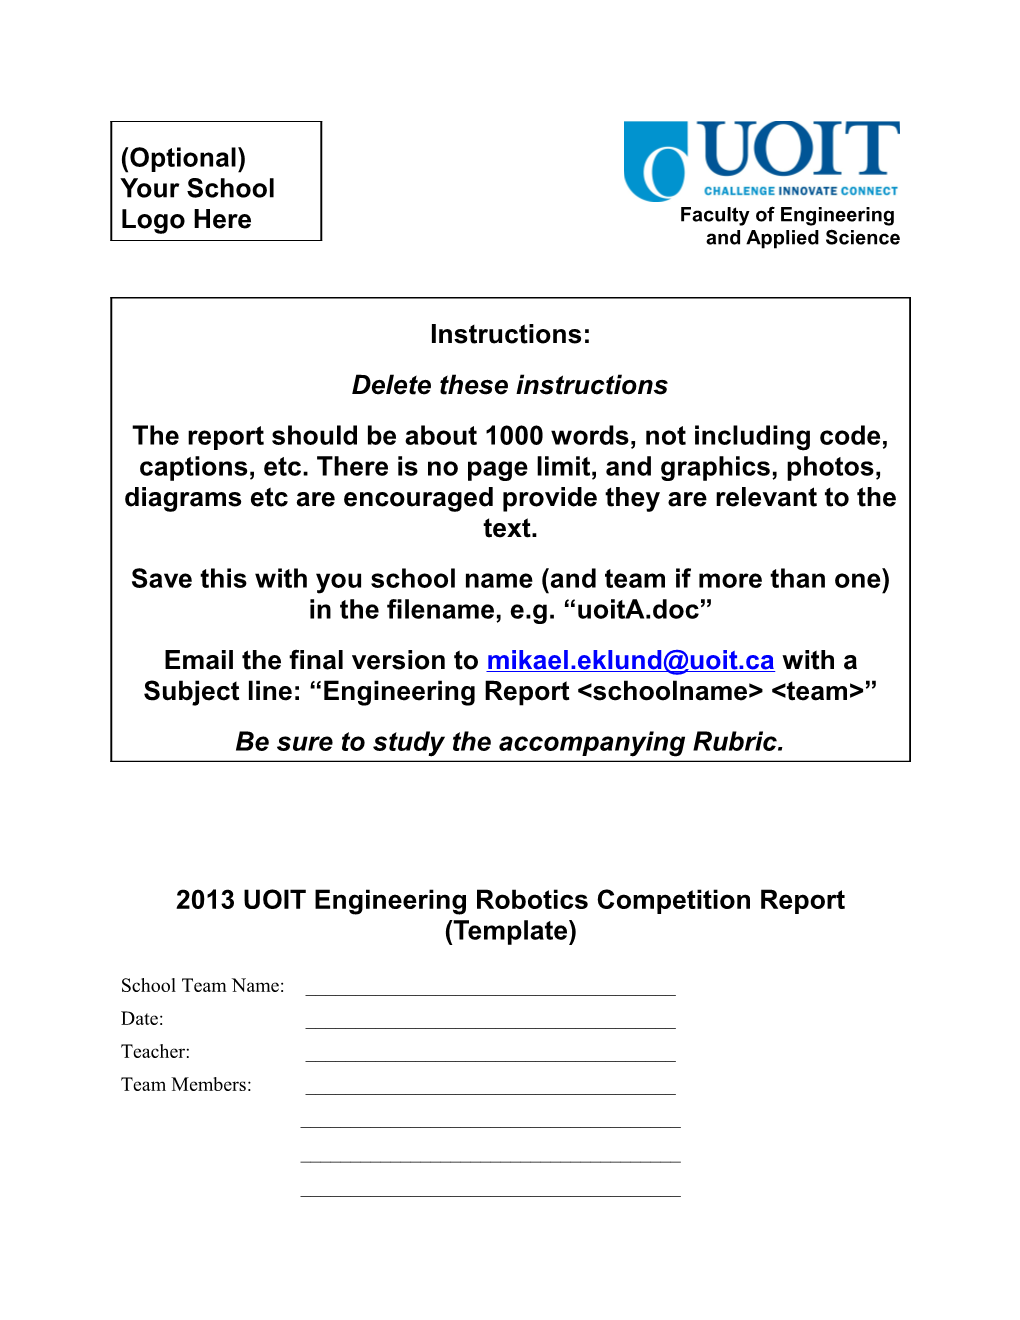 2013 UOIT Engineering Robotics Competition Report (Template)